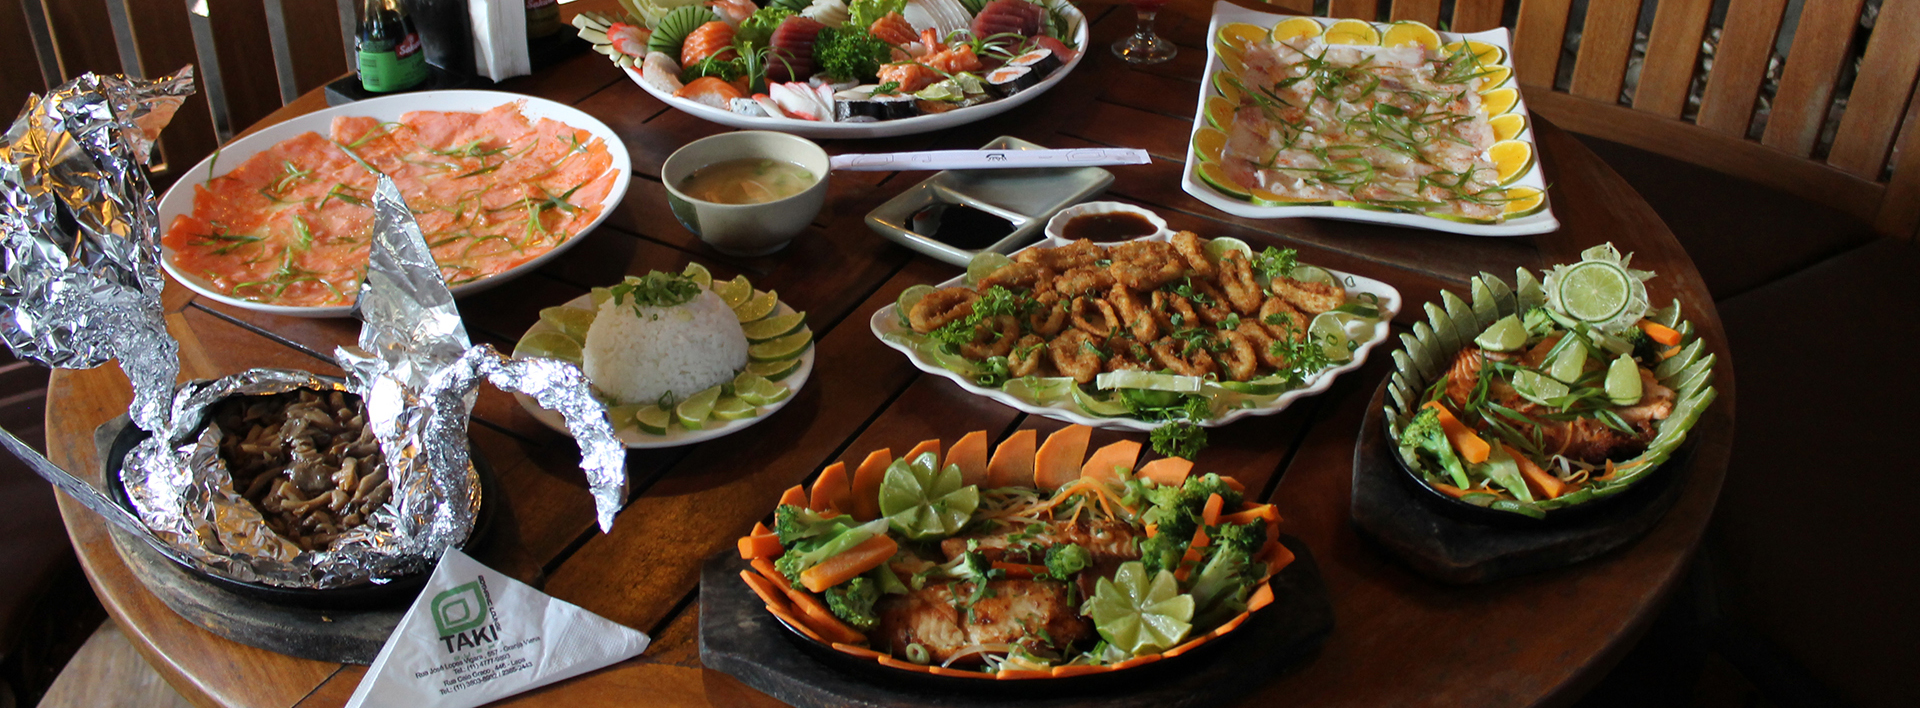 Foto de pratos oferecidos no Restaurante Taki Sushi - Granja Viana